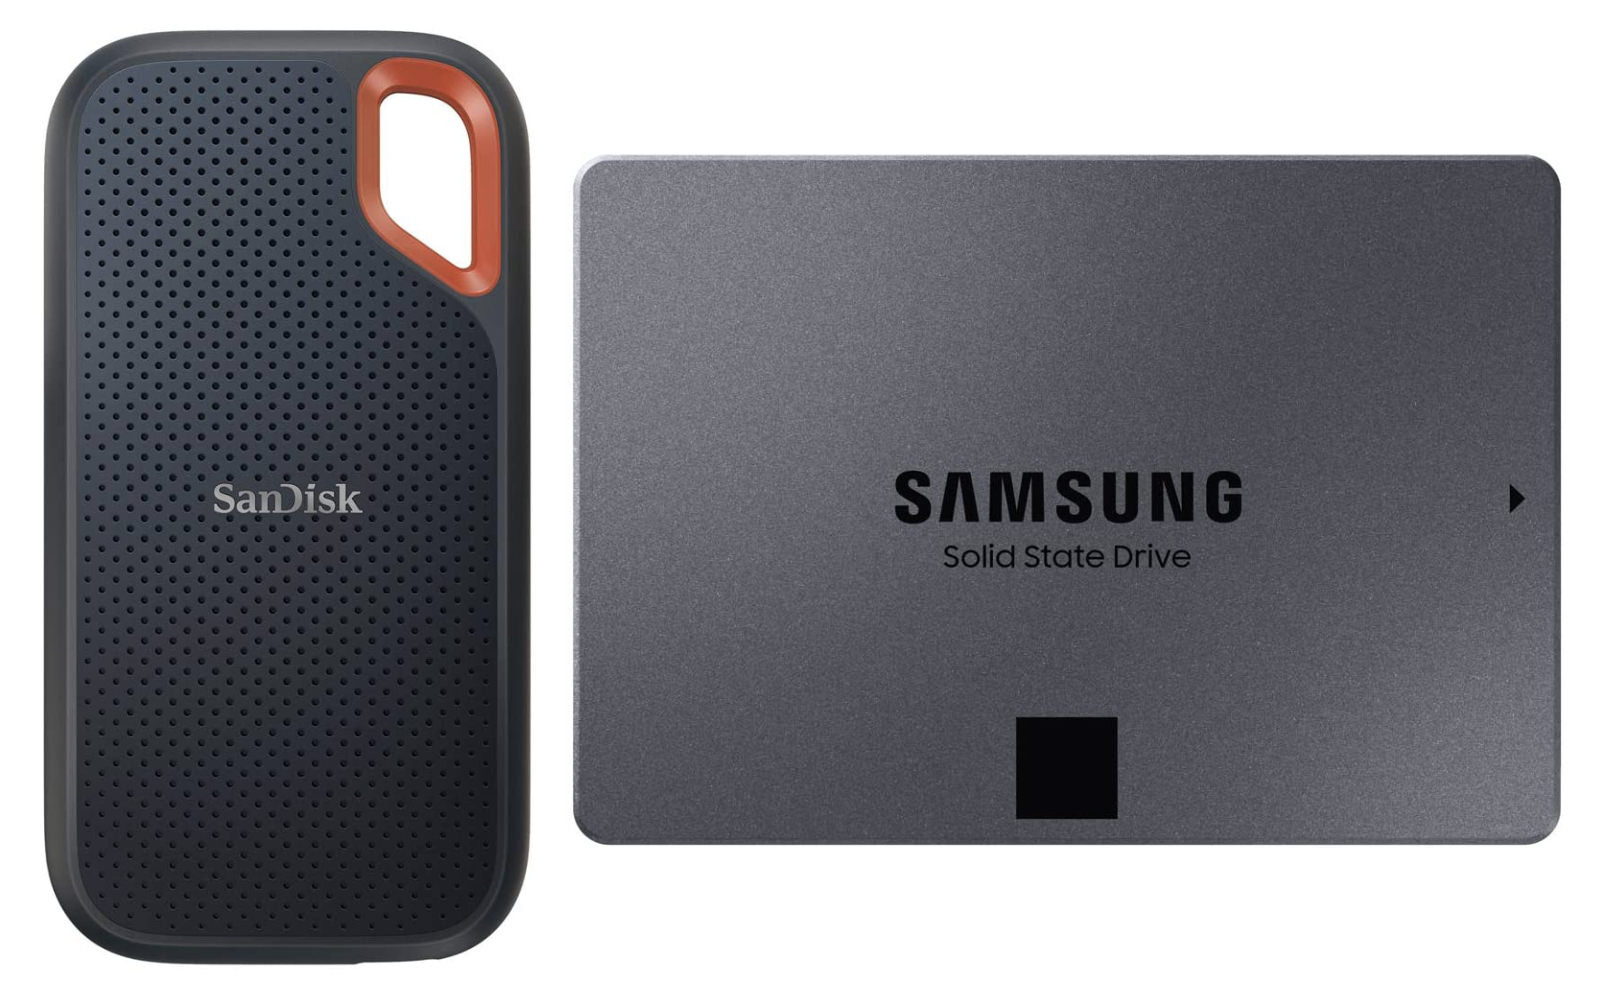 SanDisk and Samsung SSDs